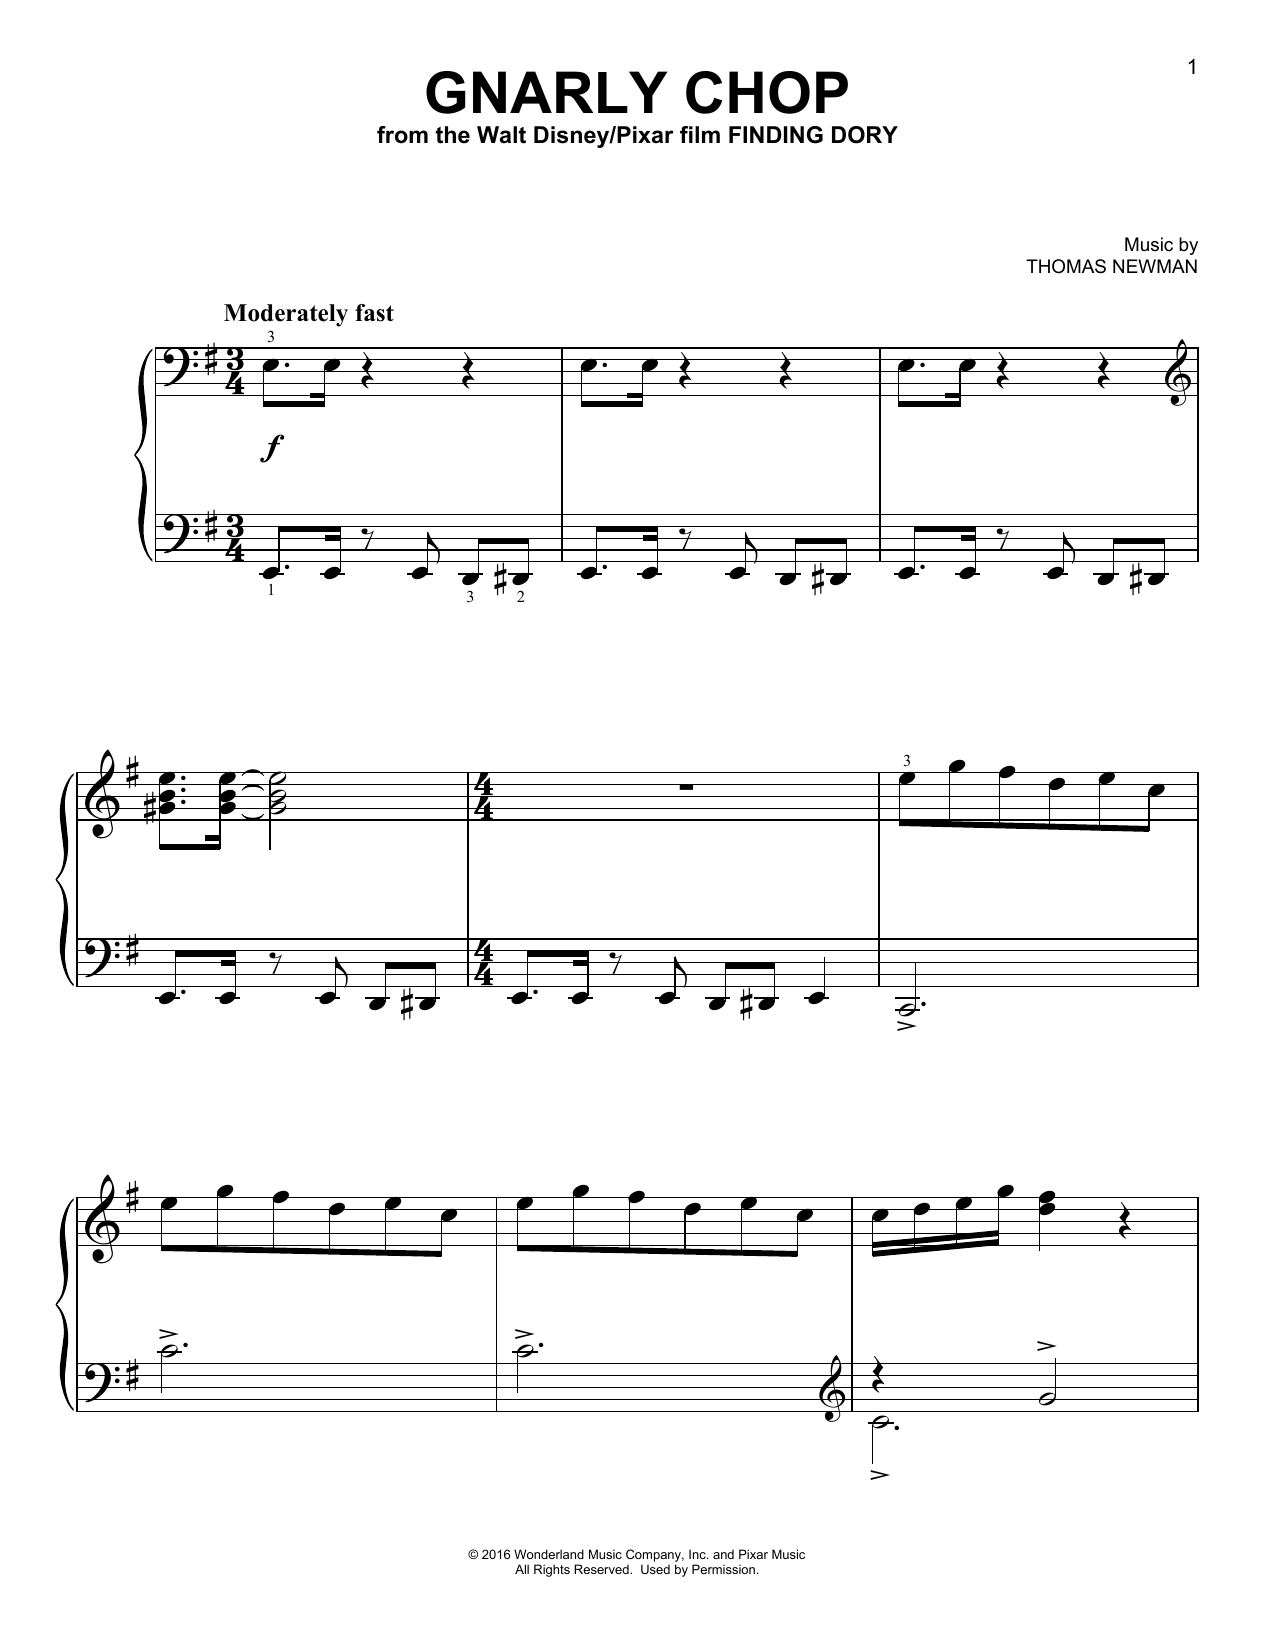 Thomas Newman Gnarly Chop Sheet Music Notes & Chords for Piano - Download or Print PDF